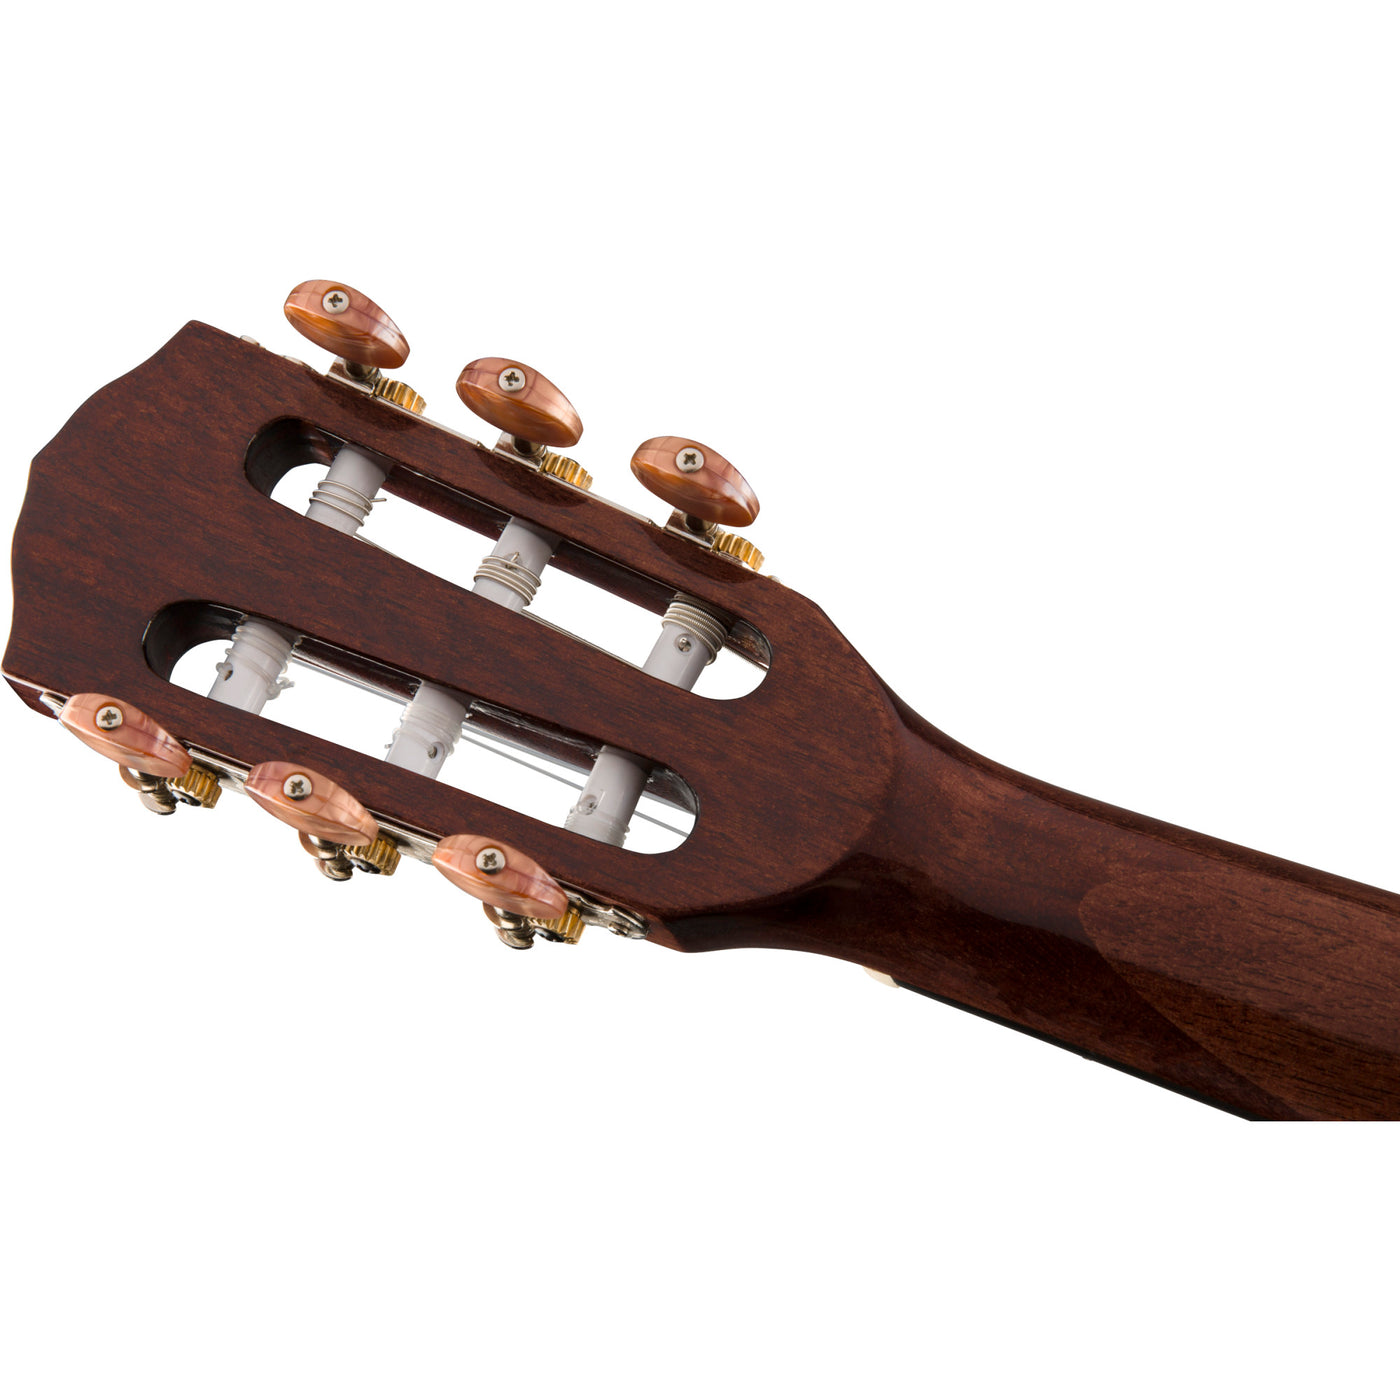 Fender CN-140SCE Acoustic-Electric Guitar, Natural (0970264321)